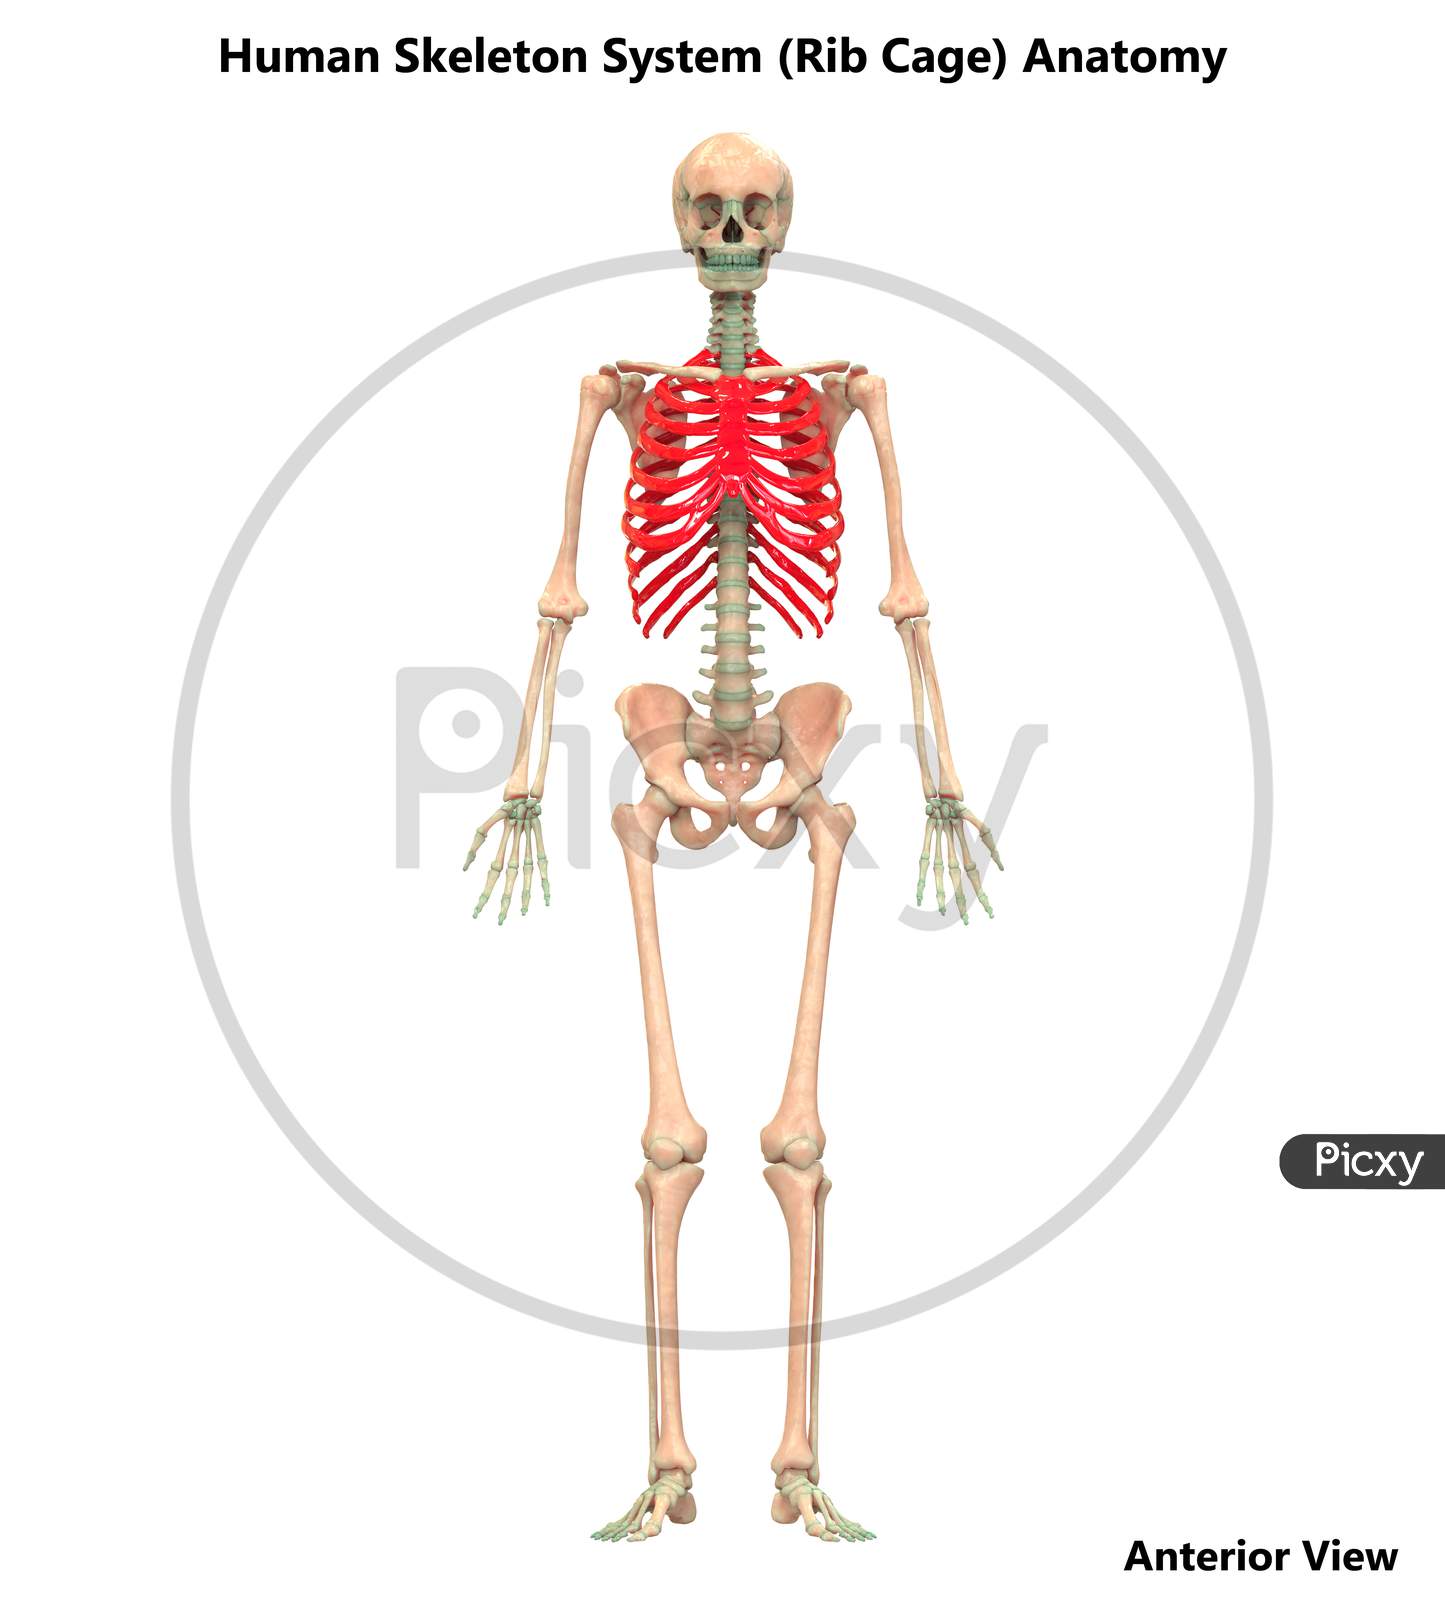 Human Skeleton System Anatomy (Rib Cage)